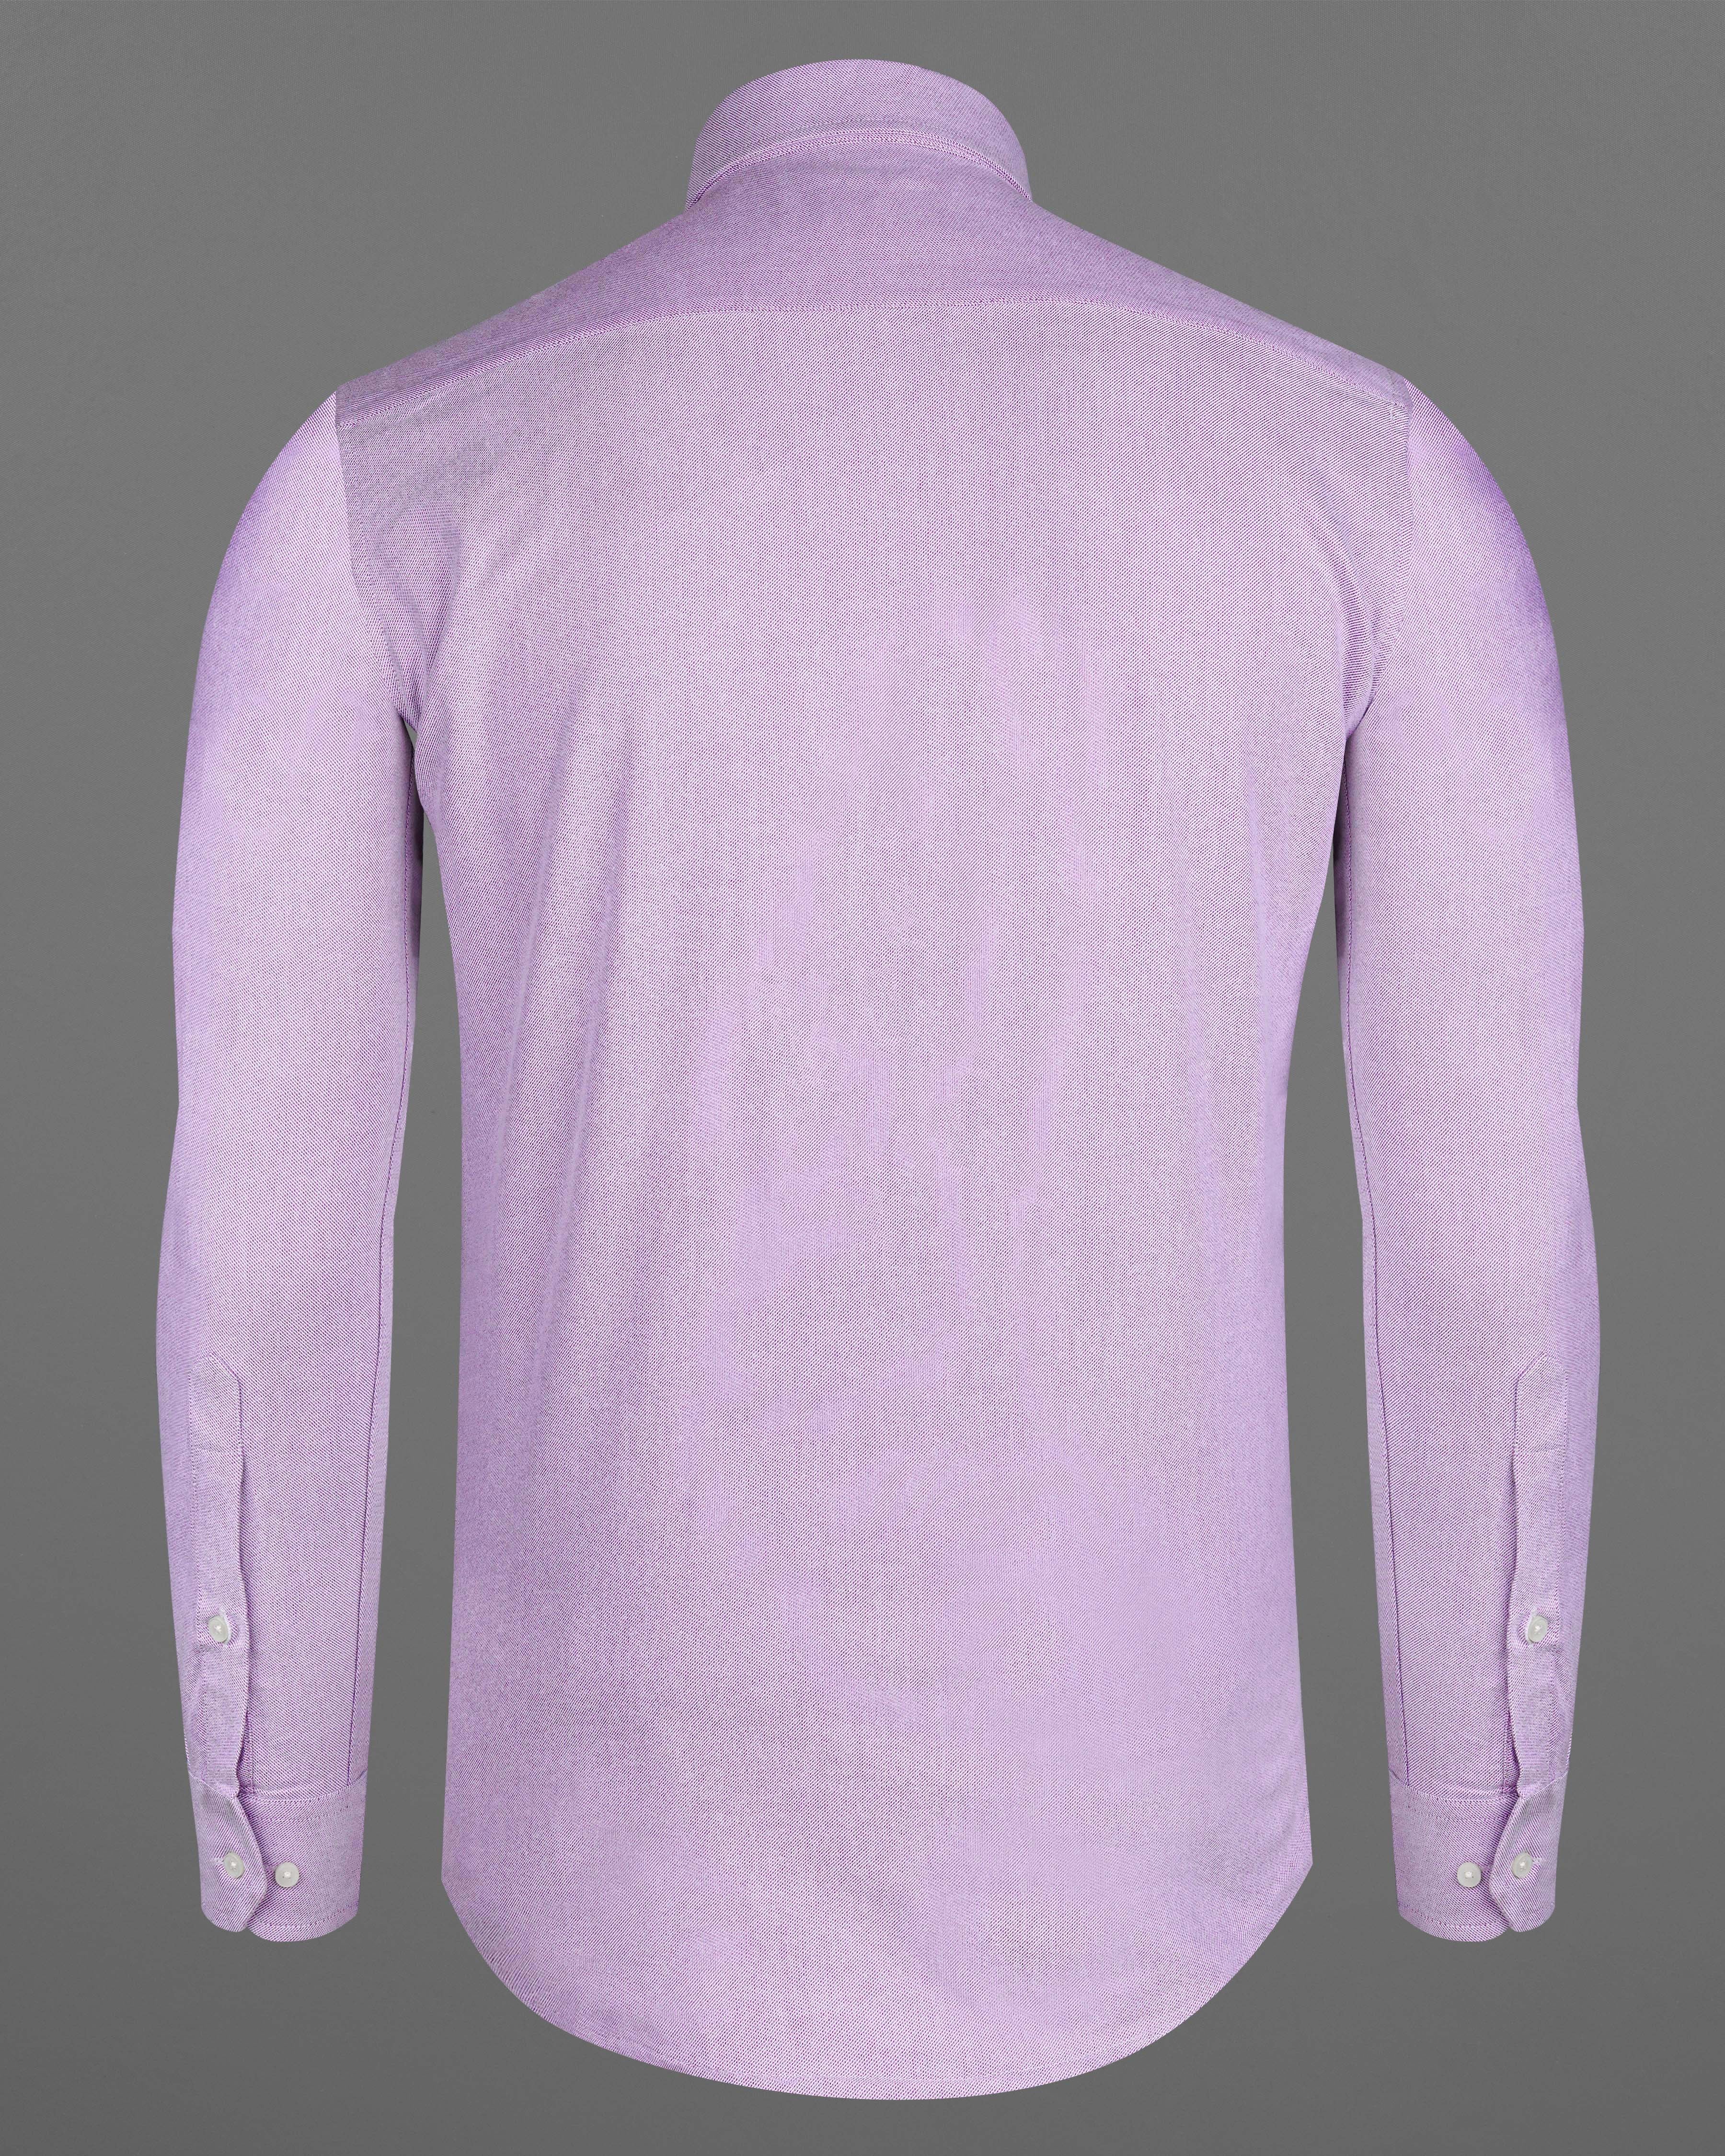 Prelude Purple Royal Oxford Overshirt/Shacket